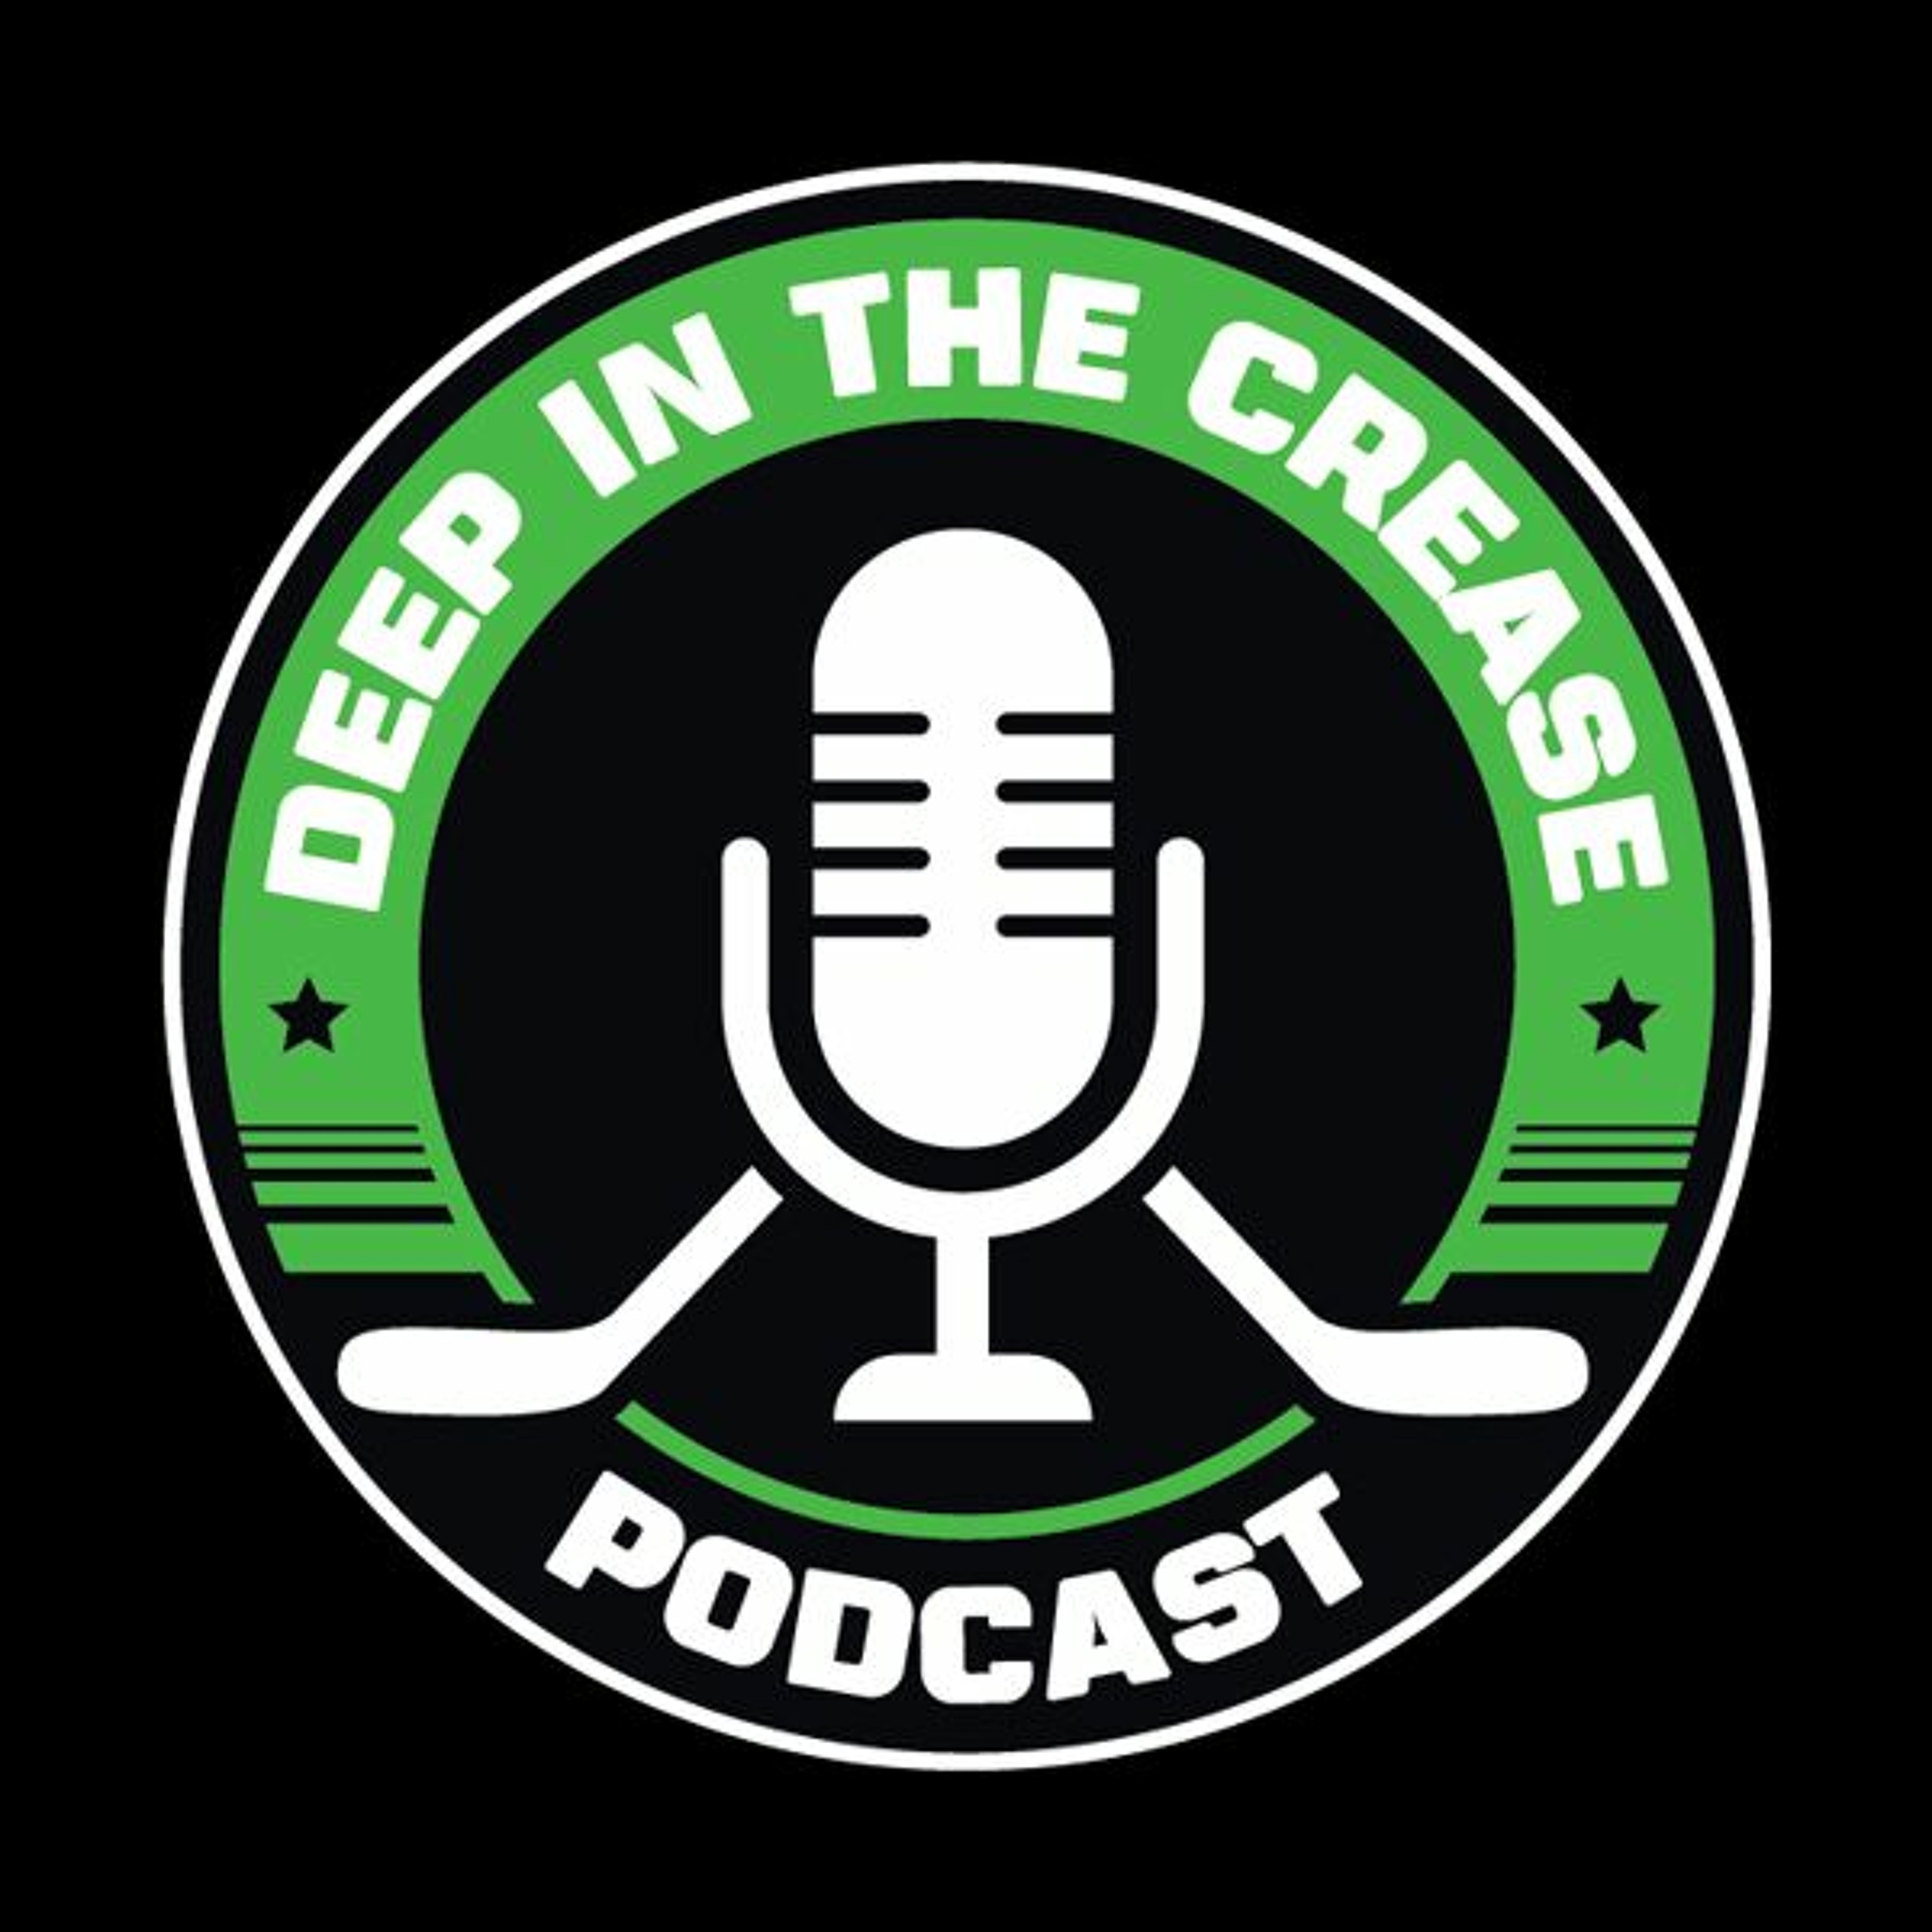 Episode 50 - Don't Drink & Podcast